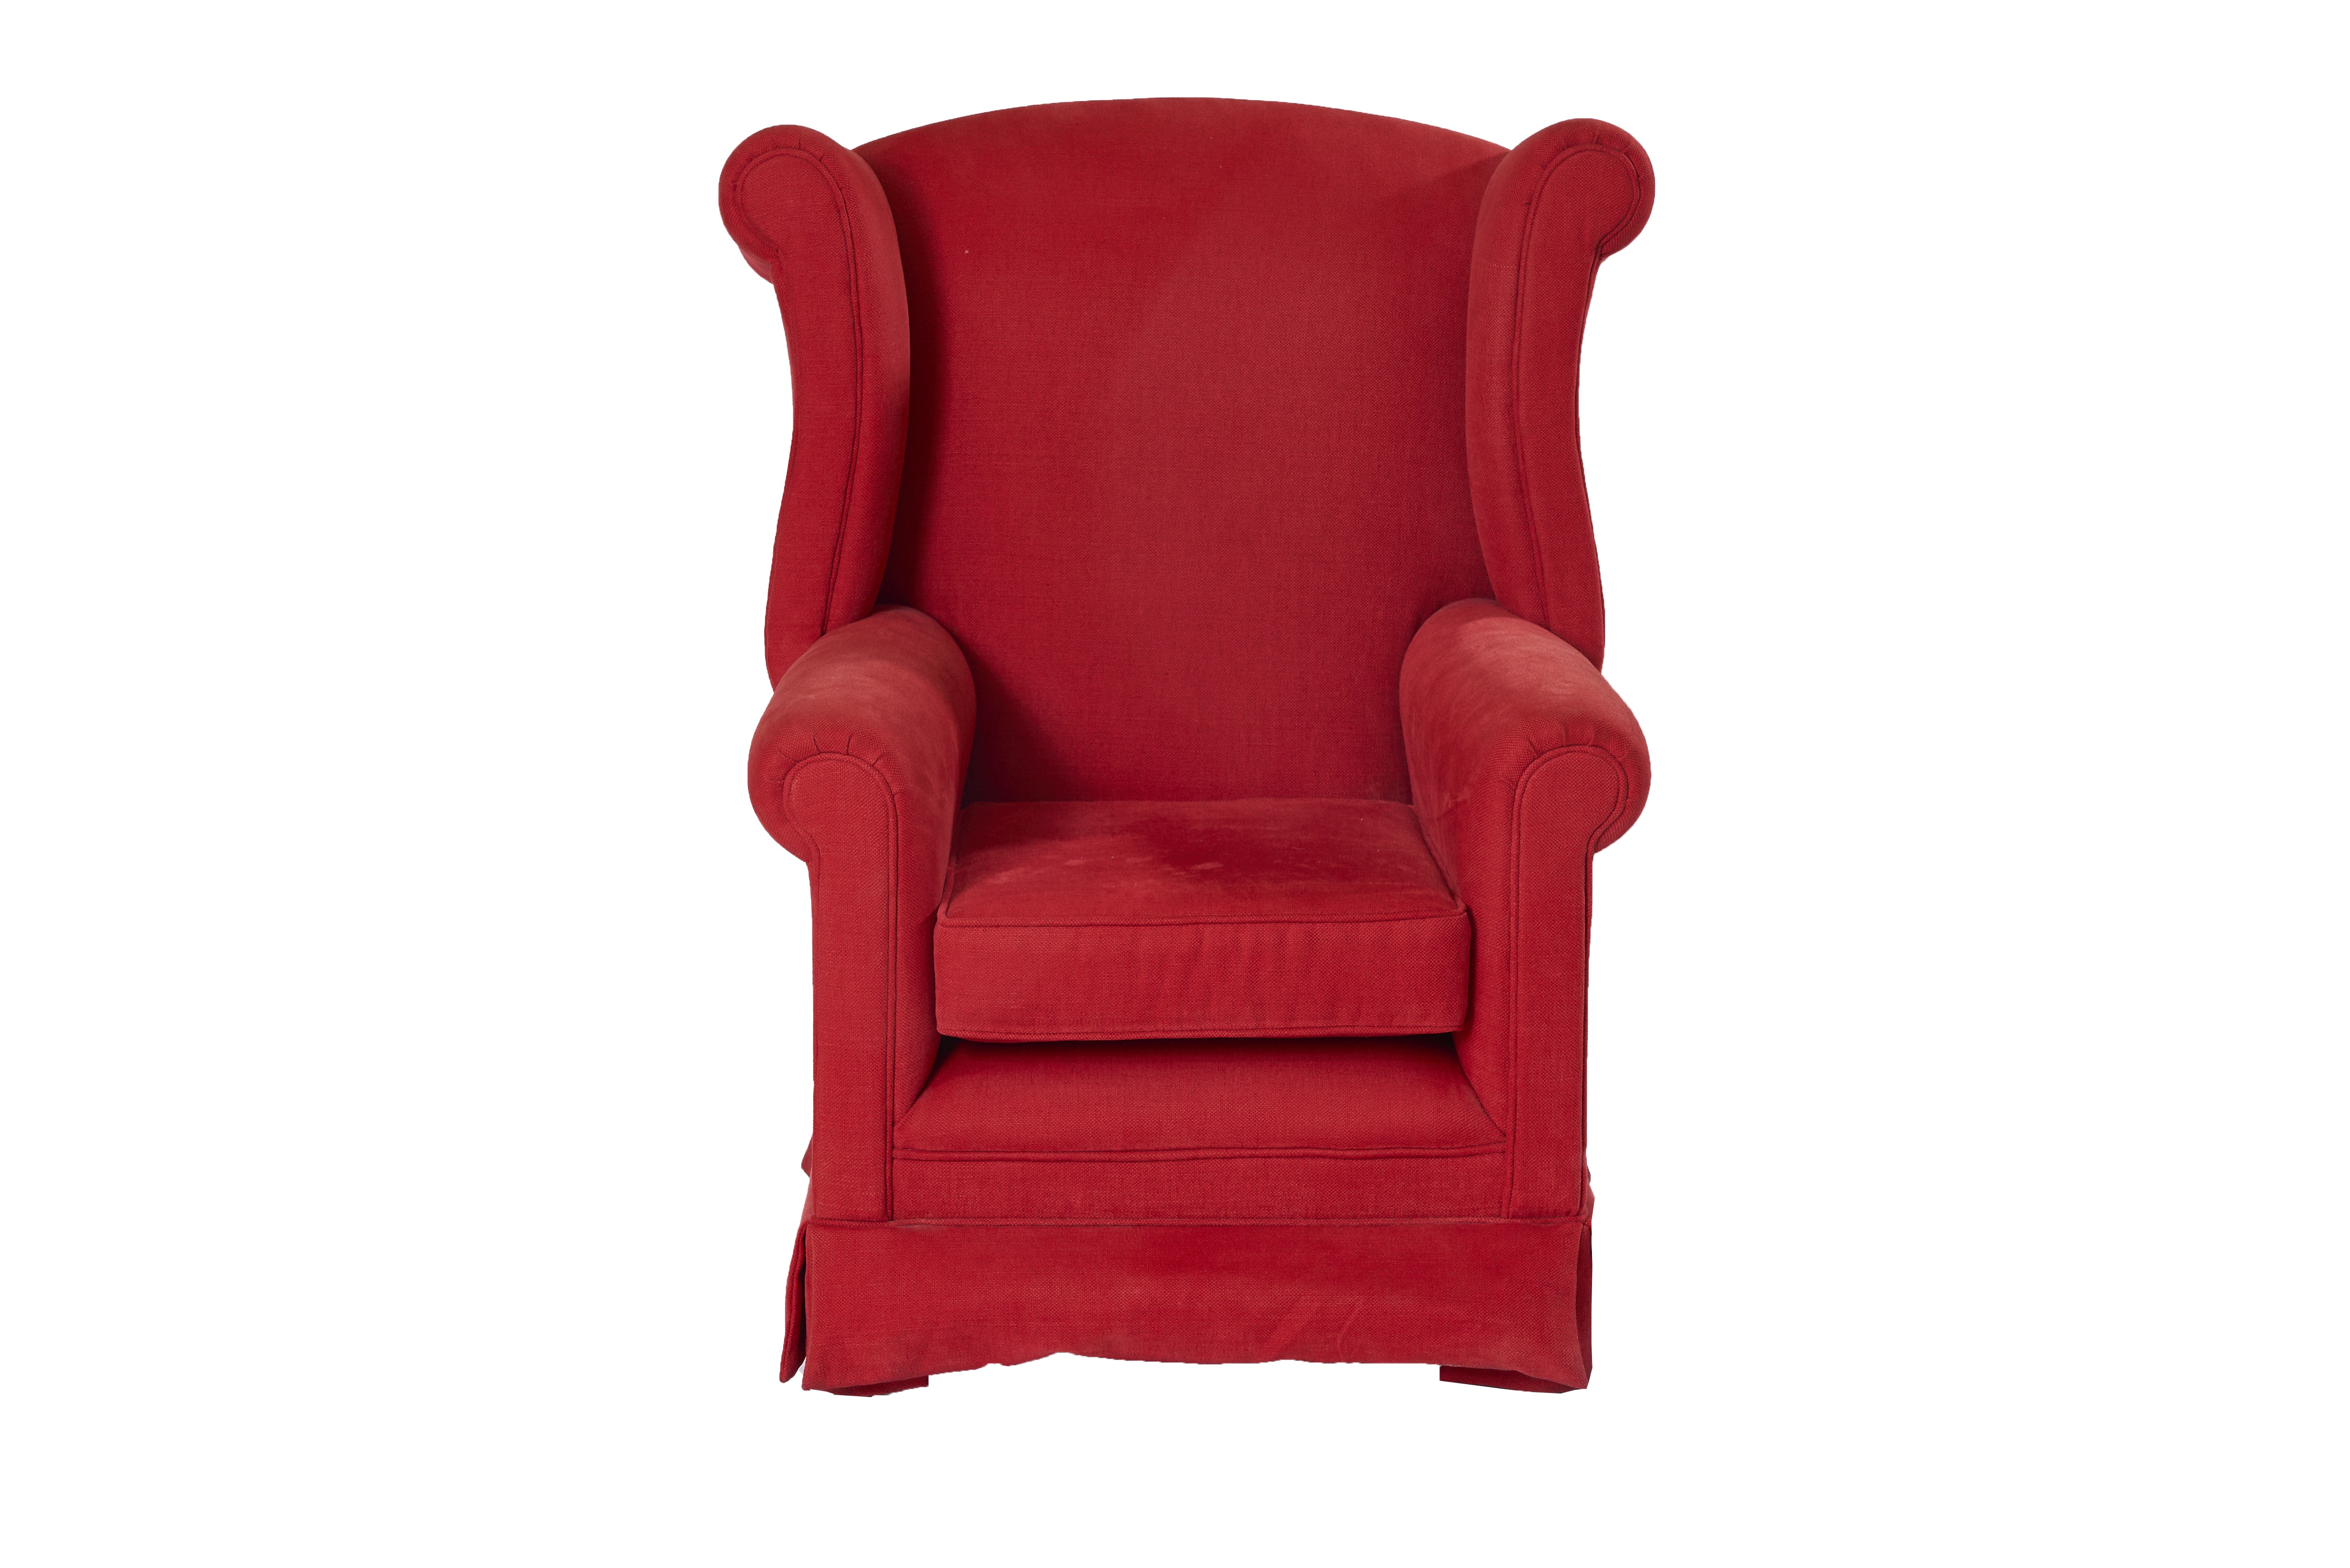 A mini Baby Ralph Lauren red armchair